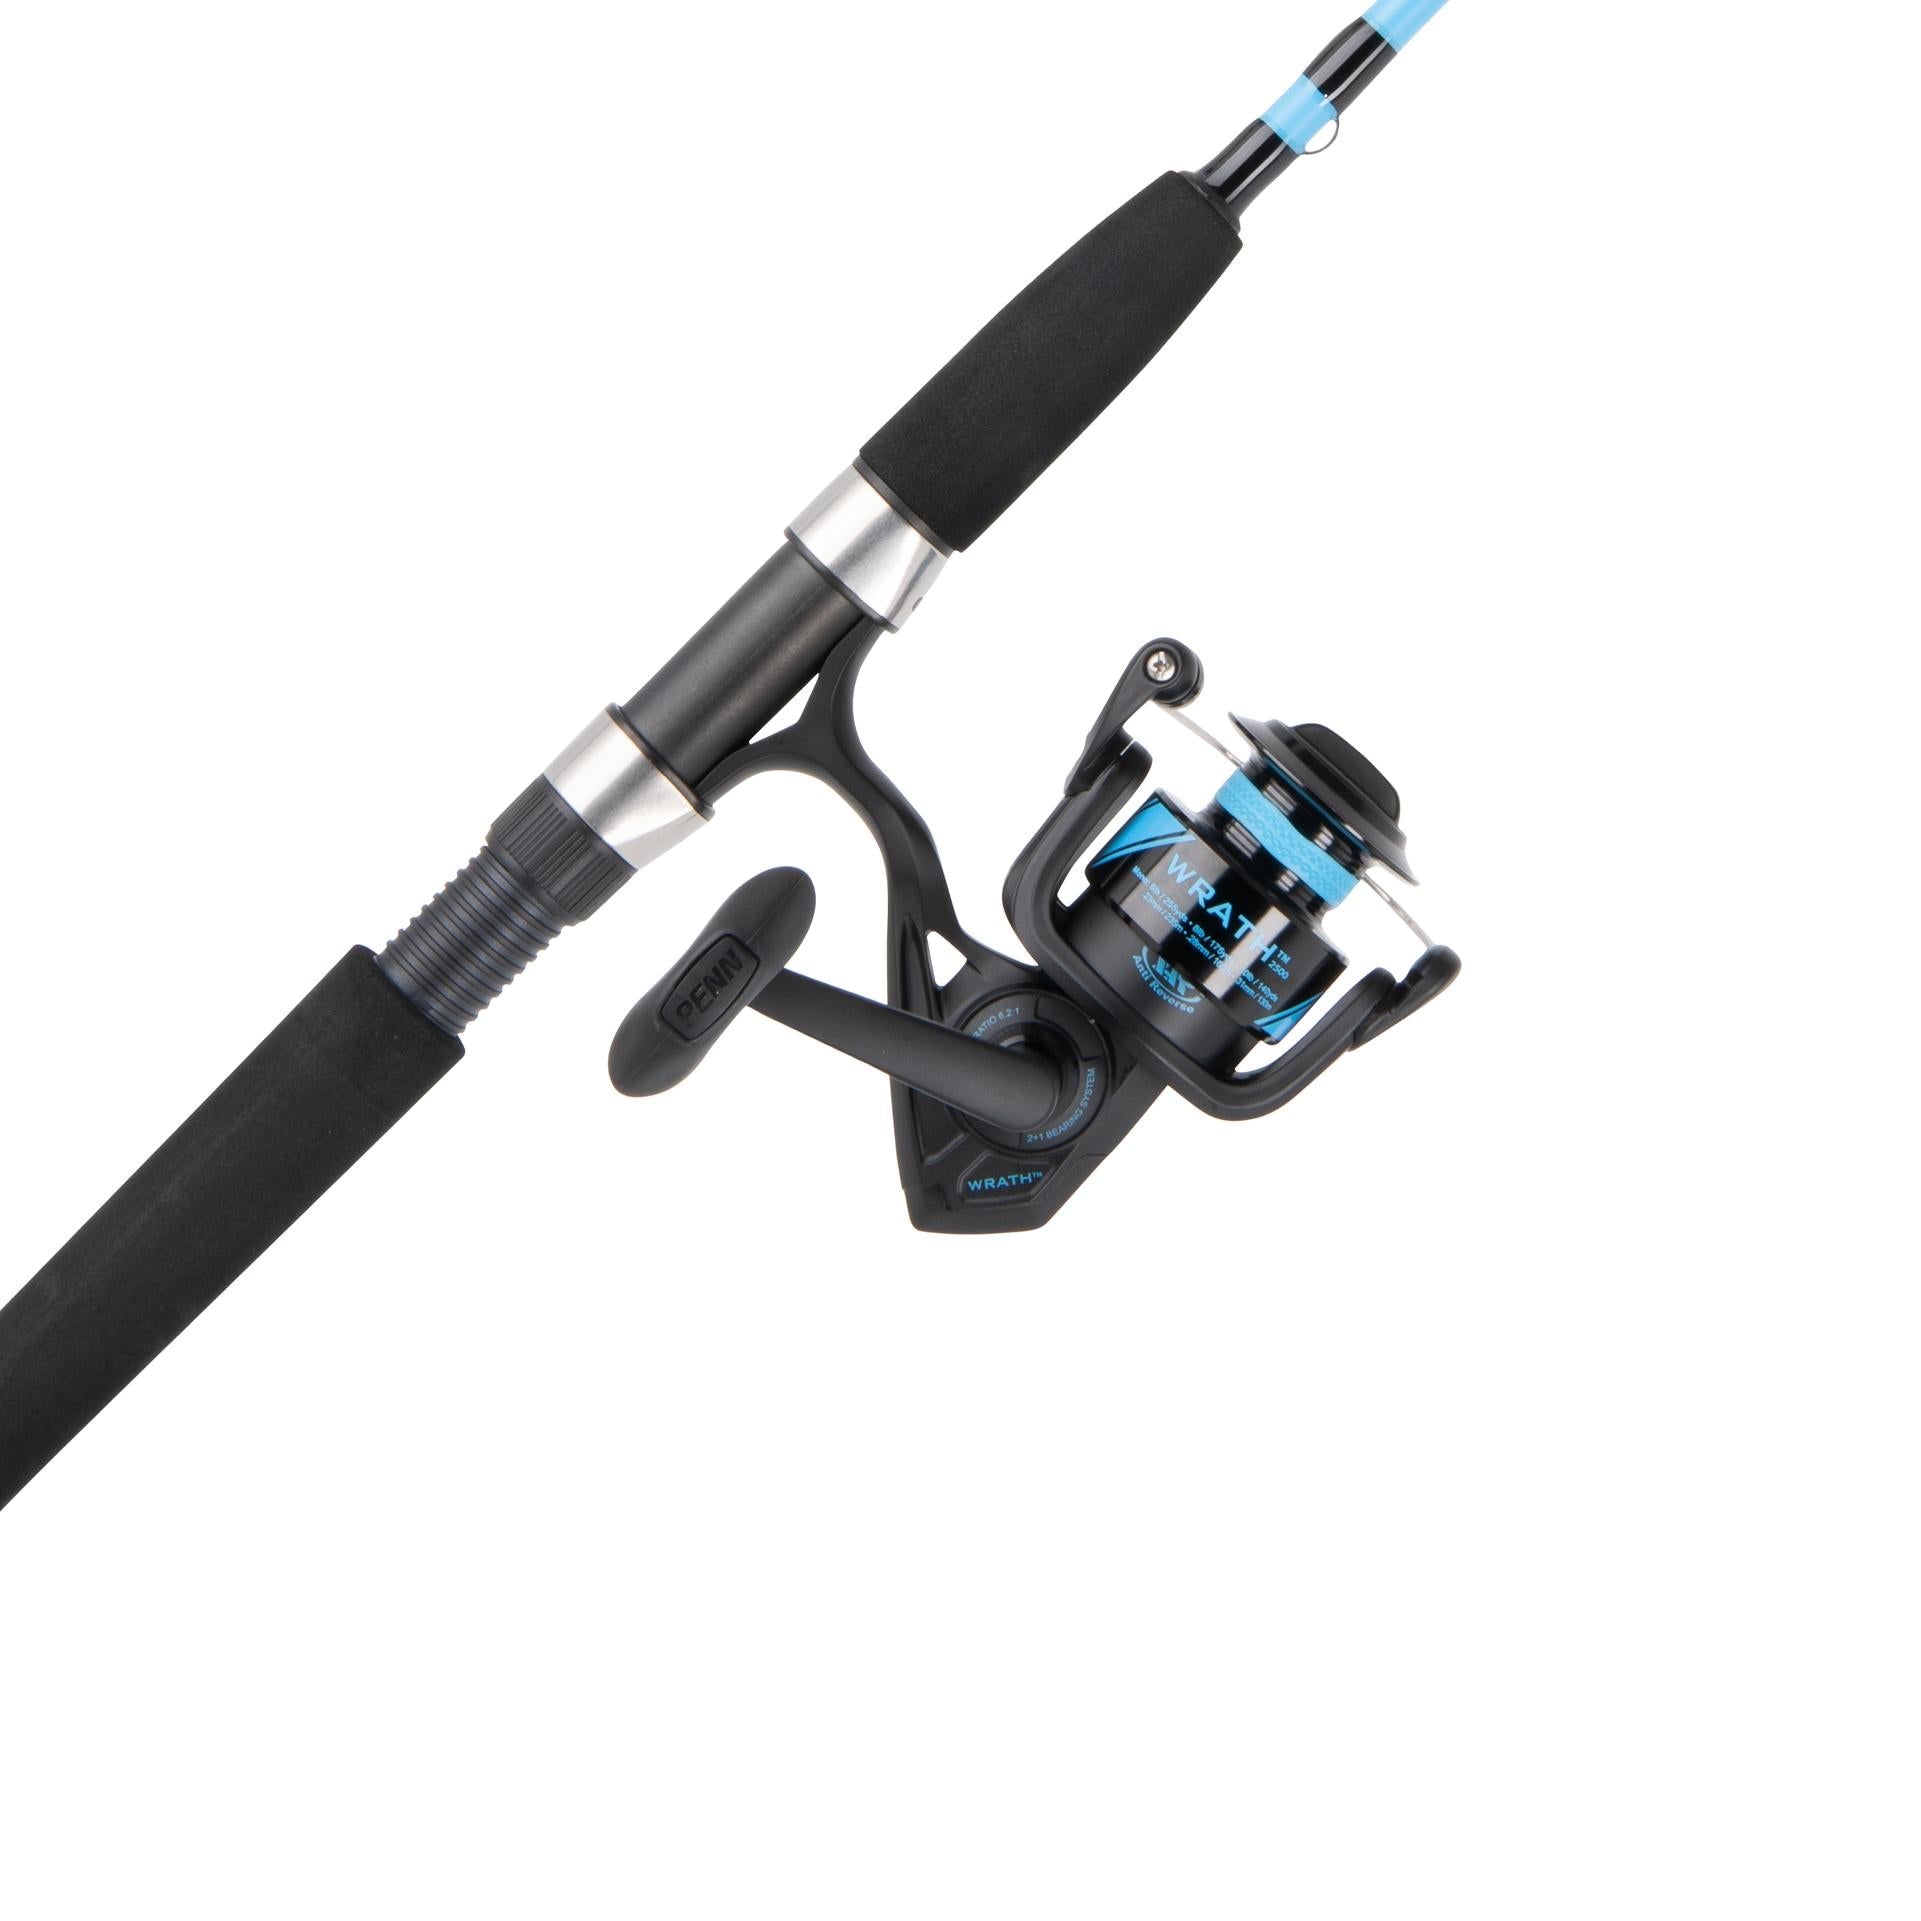 210 Fishing rod reel combo with waight set